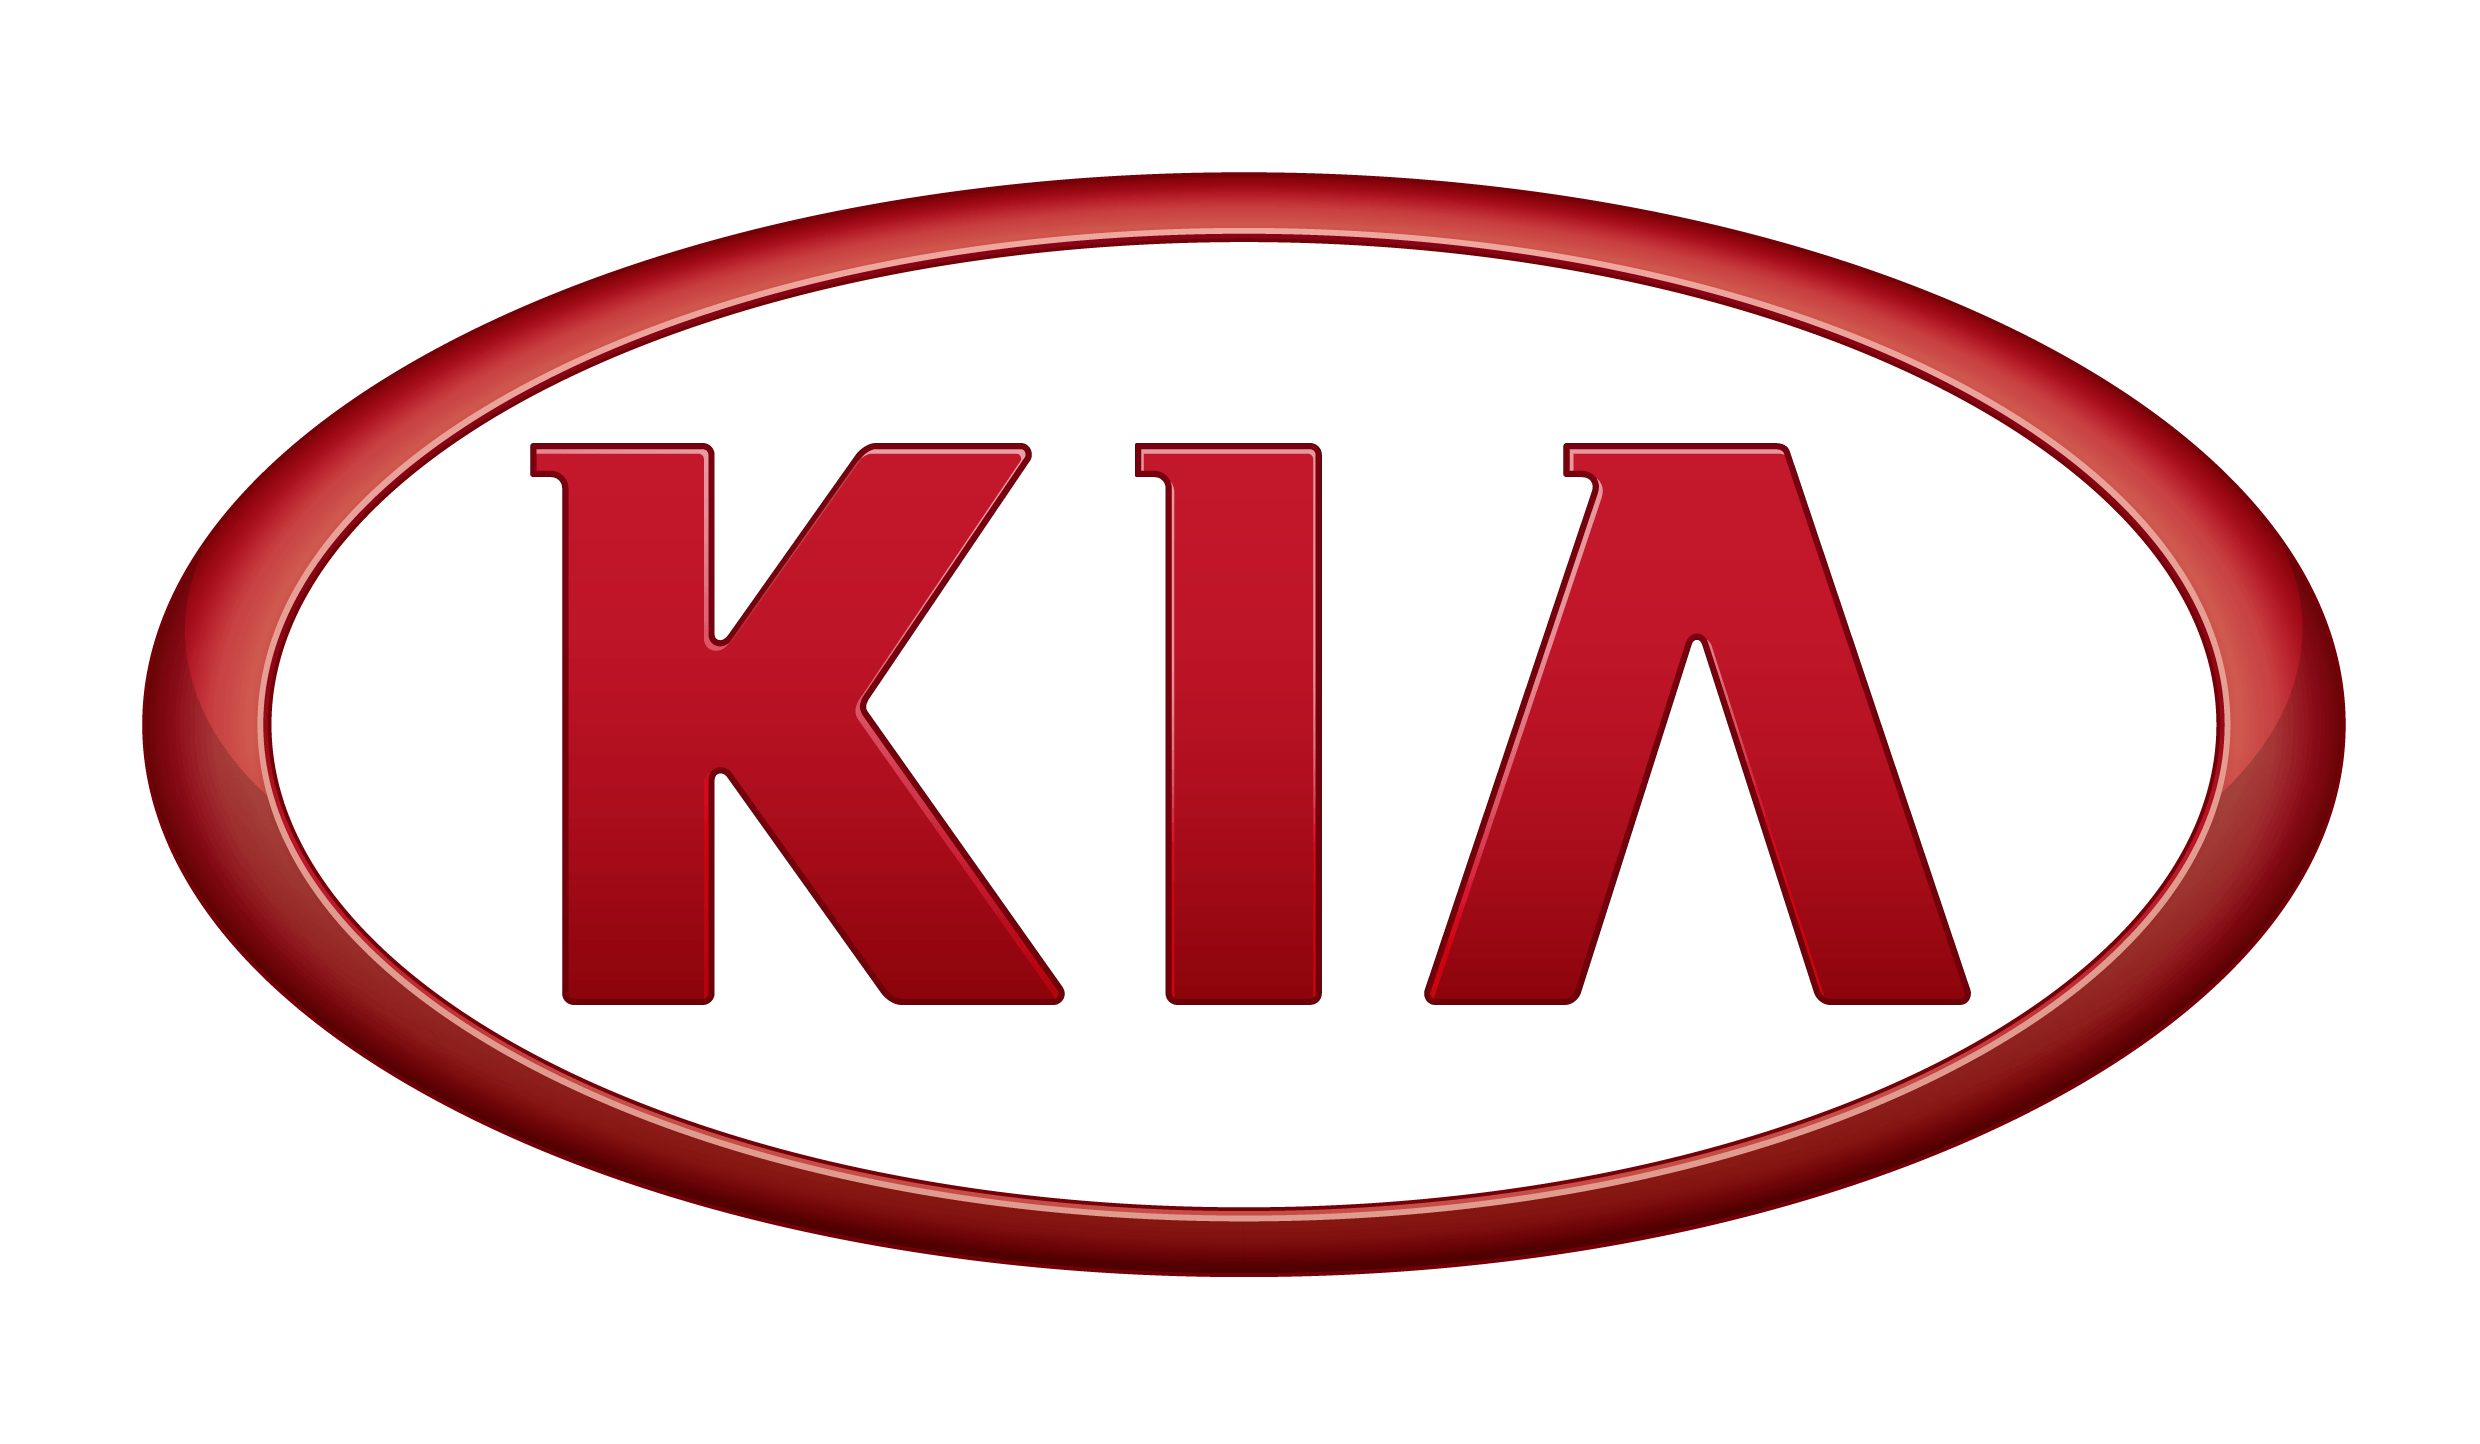 Red Oval Automotive Logo - Kia Logo, Kia Car Symbol Meaning and History | Car Brand Names.com